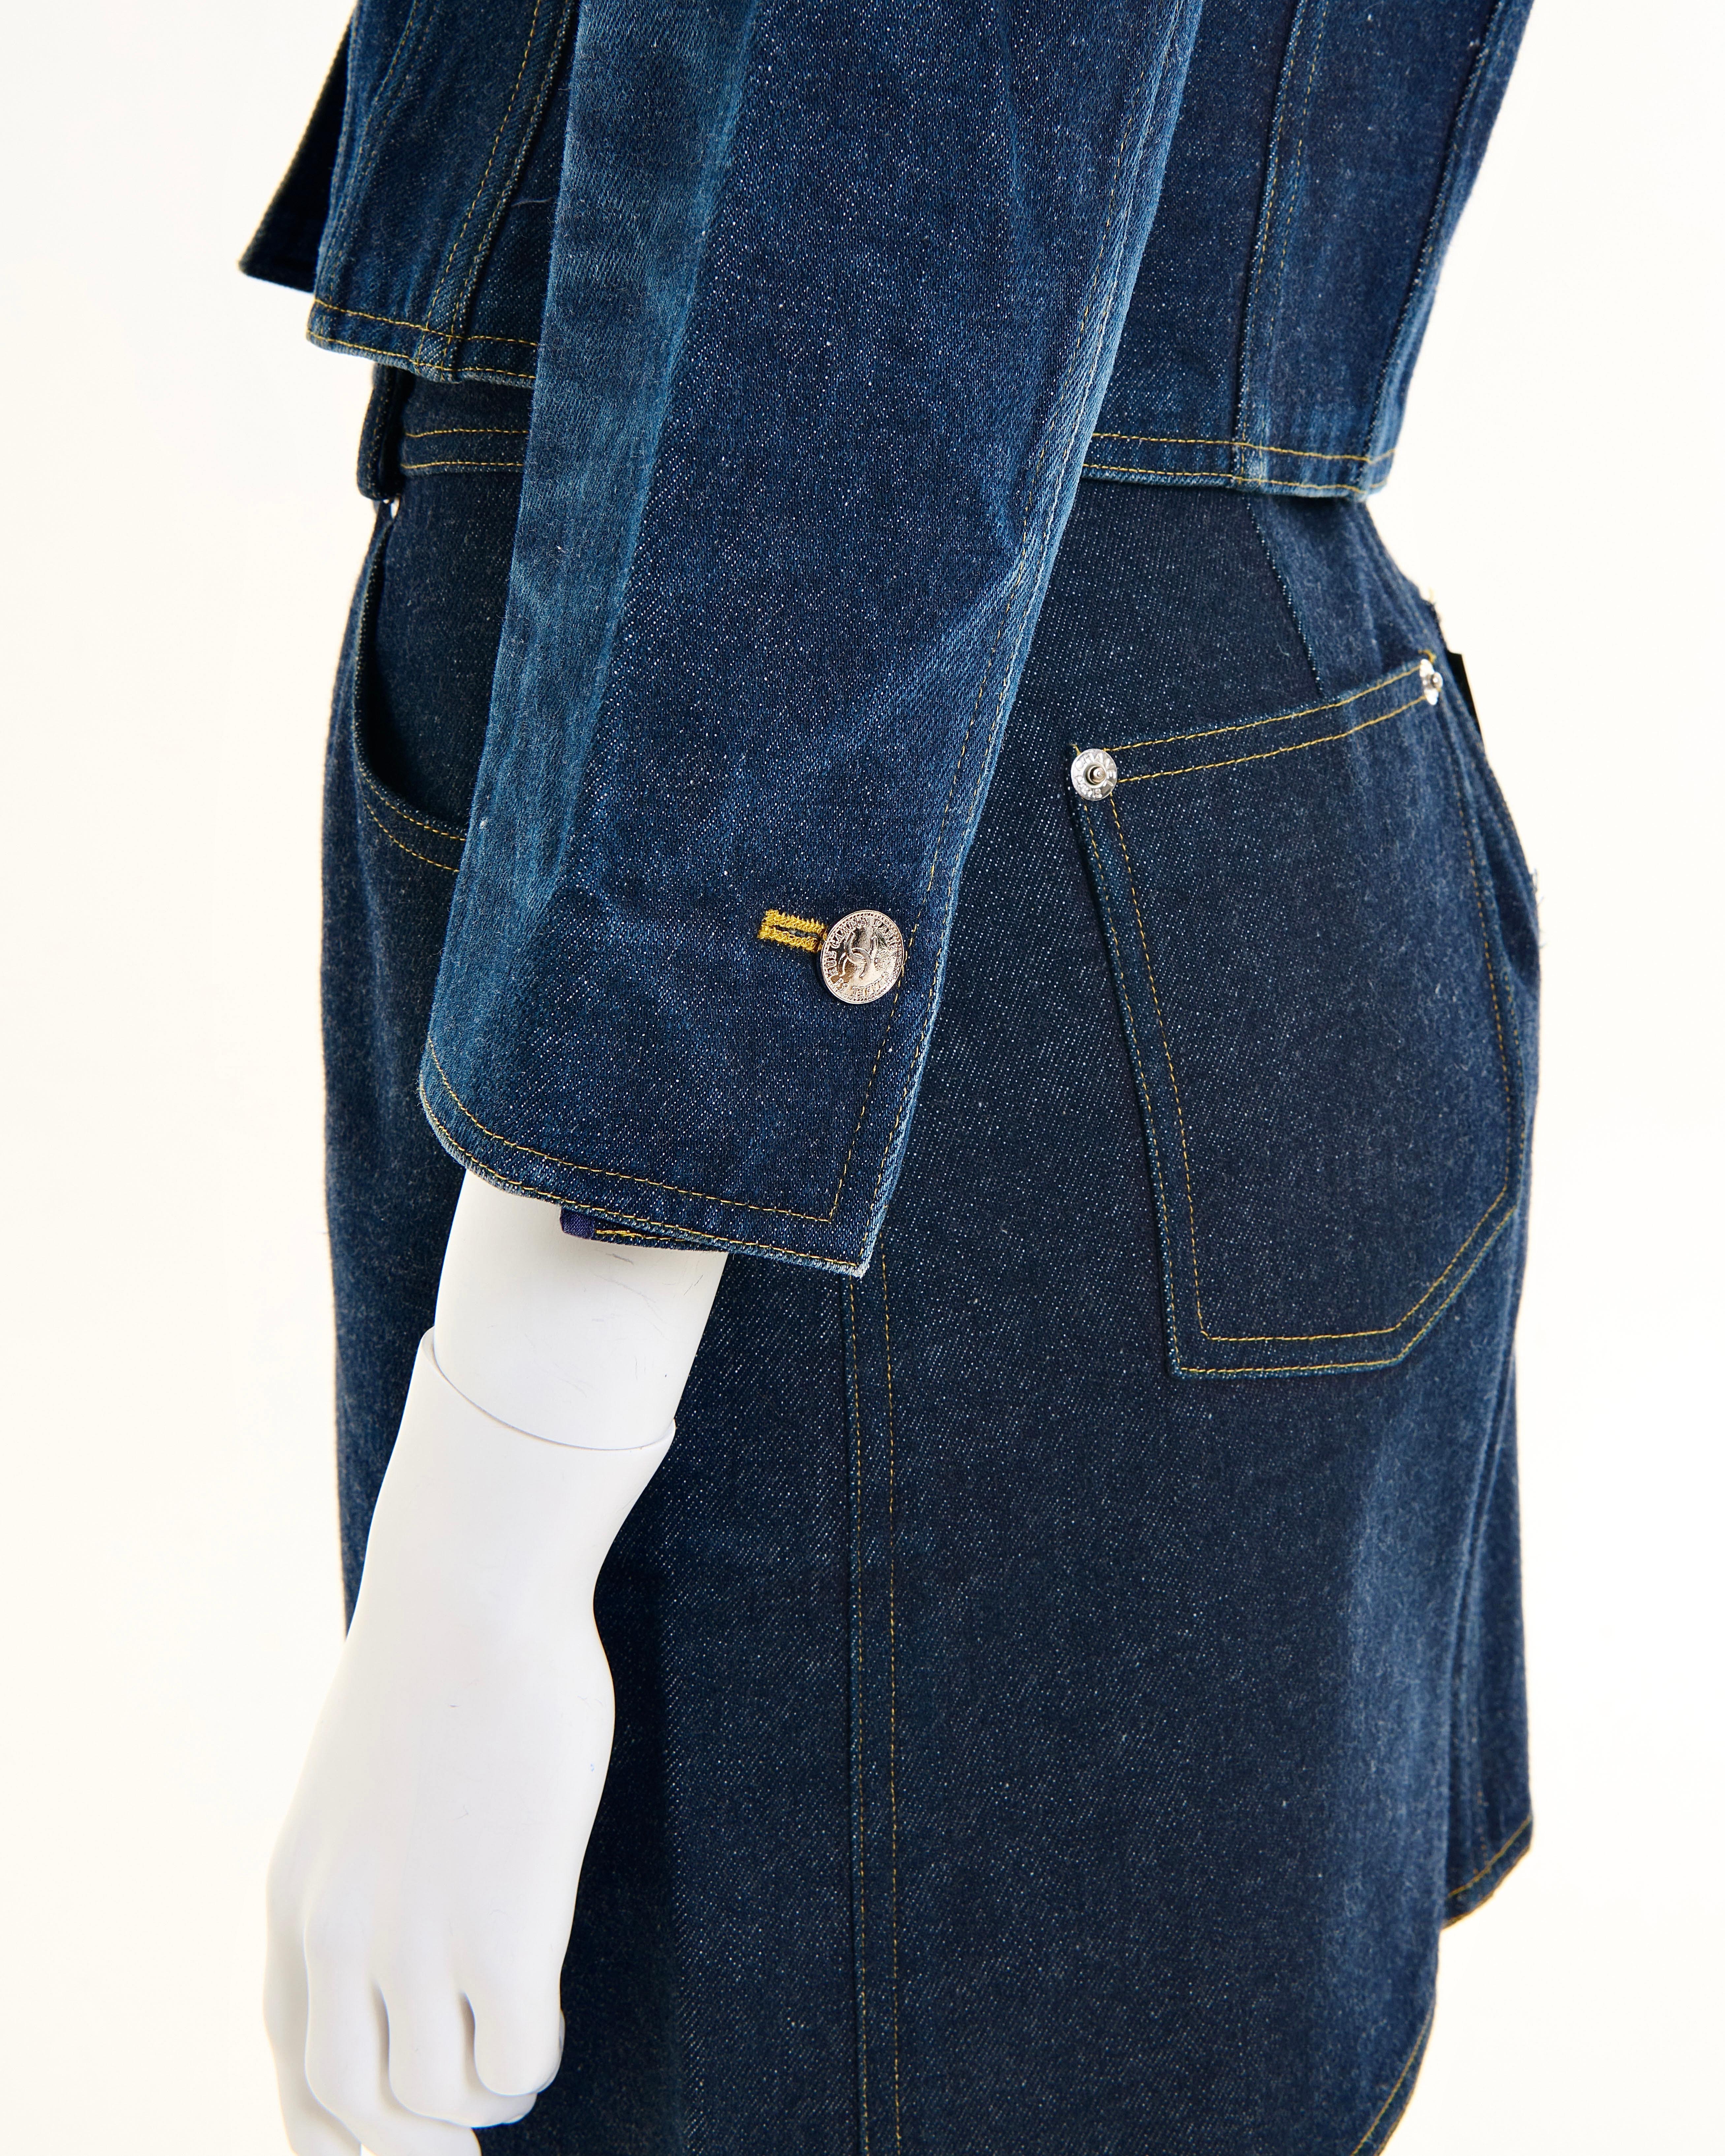 Chanel by Karl Lagerfeld S/S 1996 Blue denim indigo jacket and mini skirt set For Sale 7